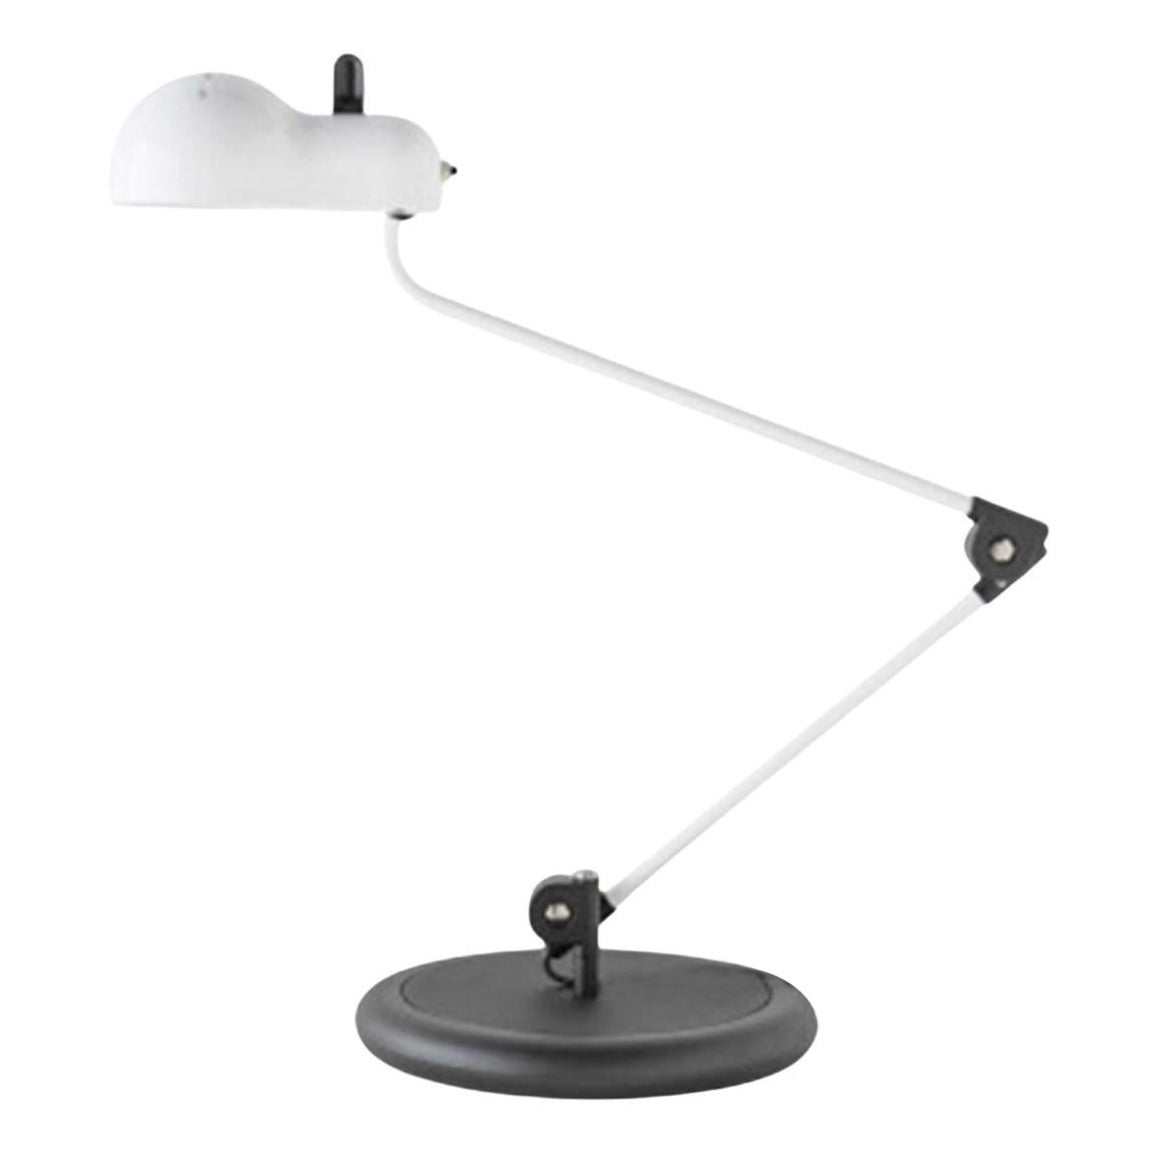 Joe Colombo 'Topo' Table Lamp in White and Black with Base for Stilnovo